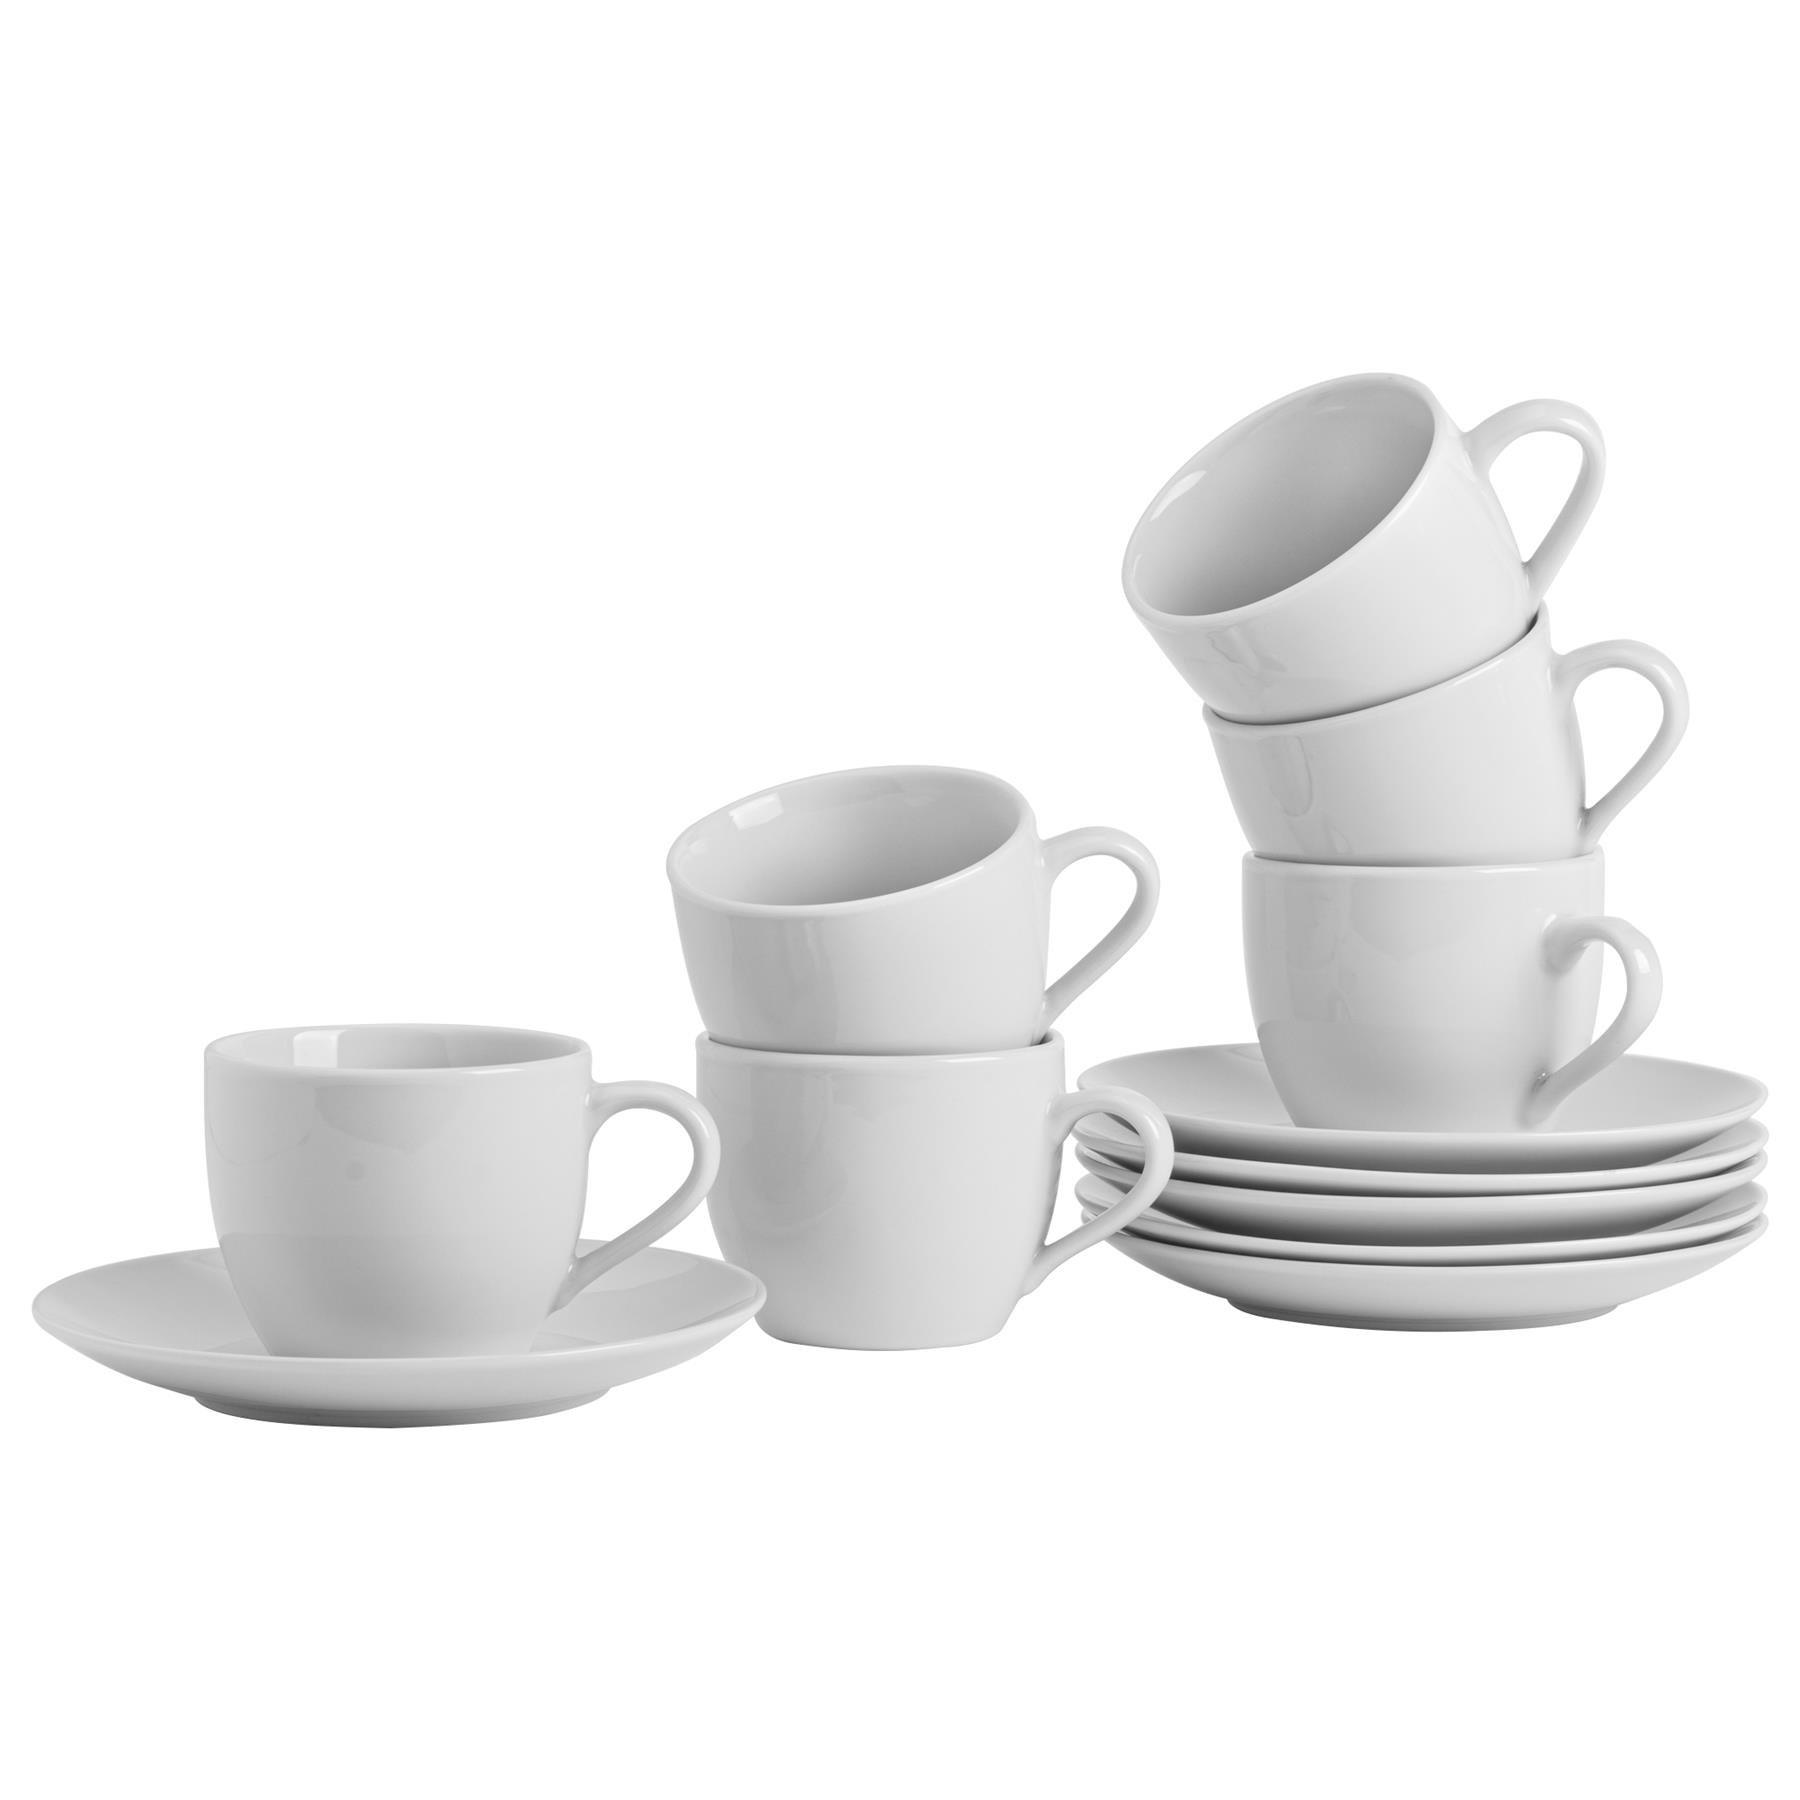 Classic White Teacup & Saucer Set - 200ml - 48 Piece